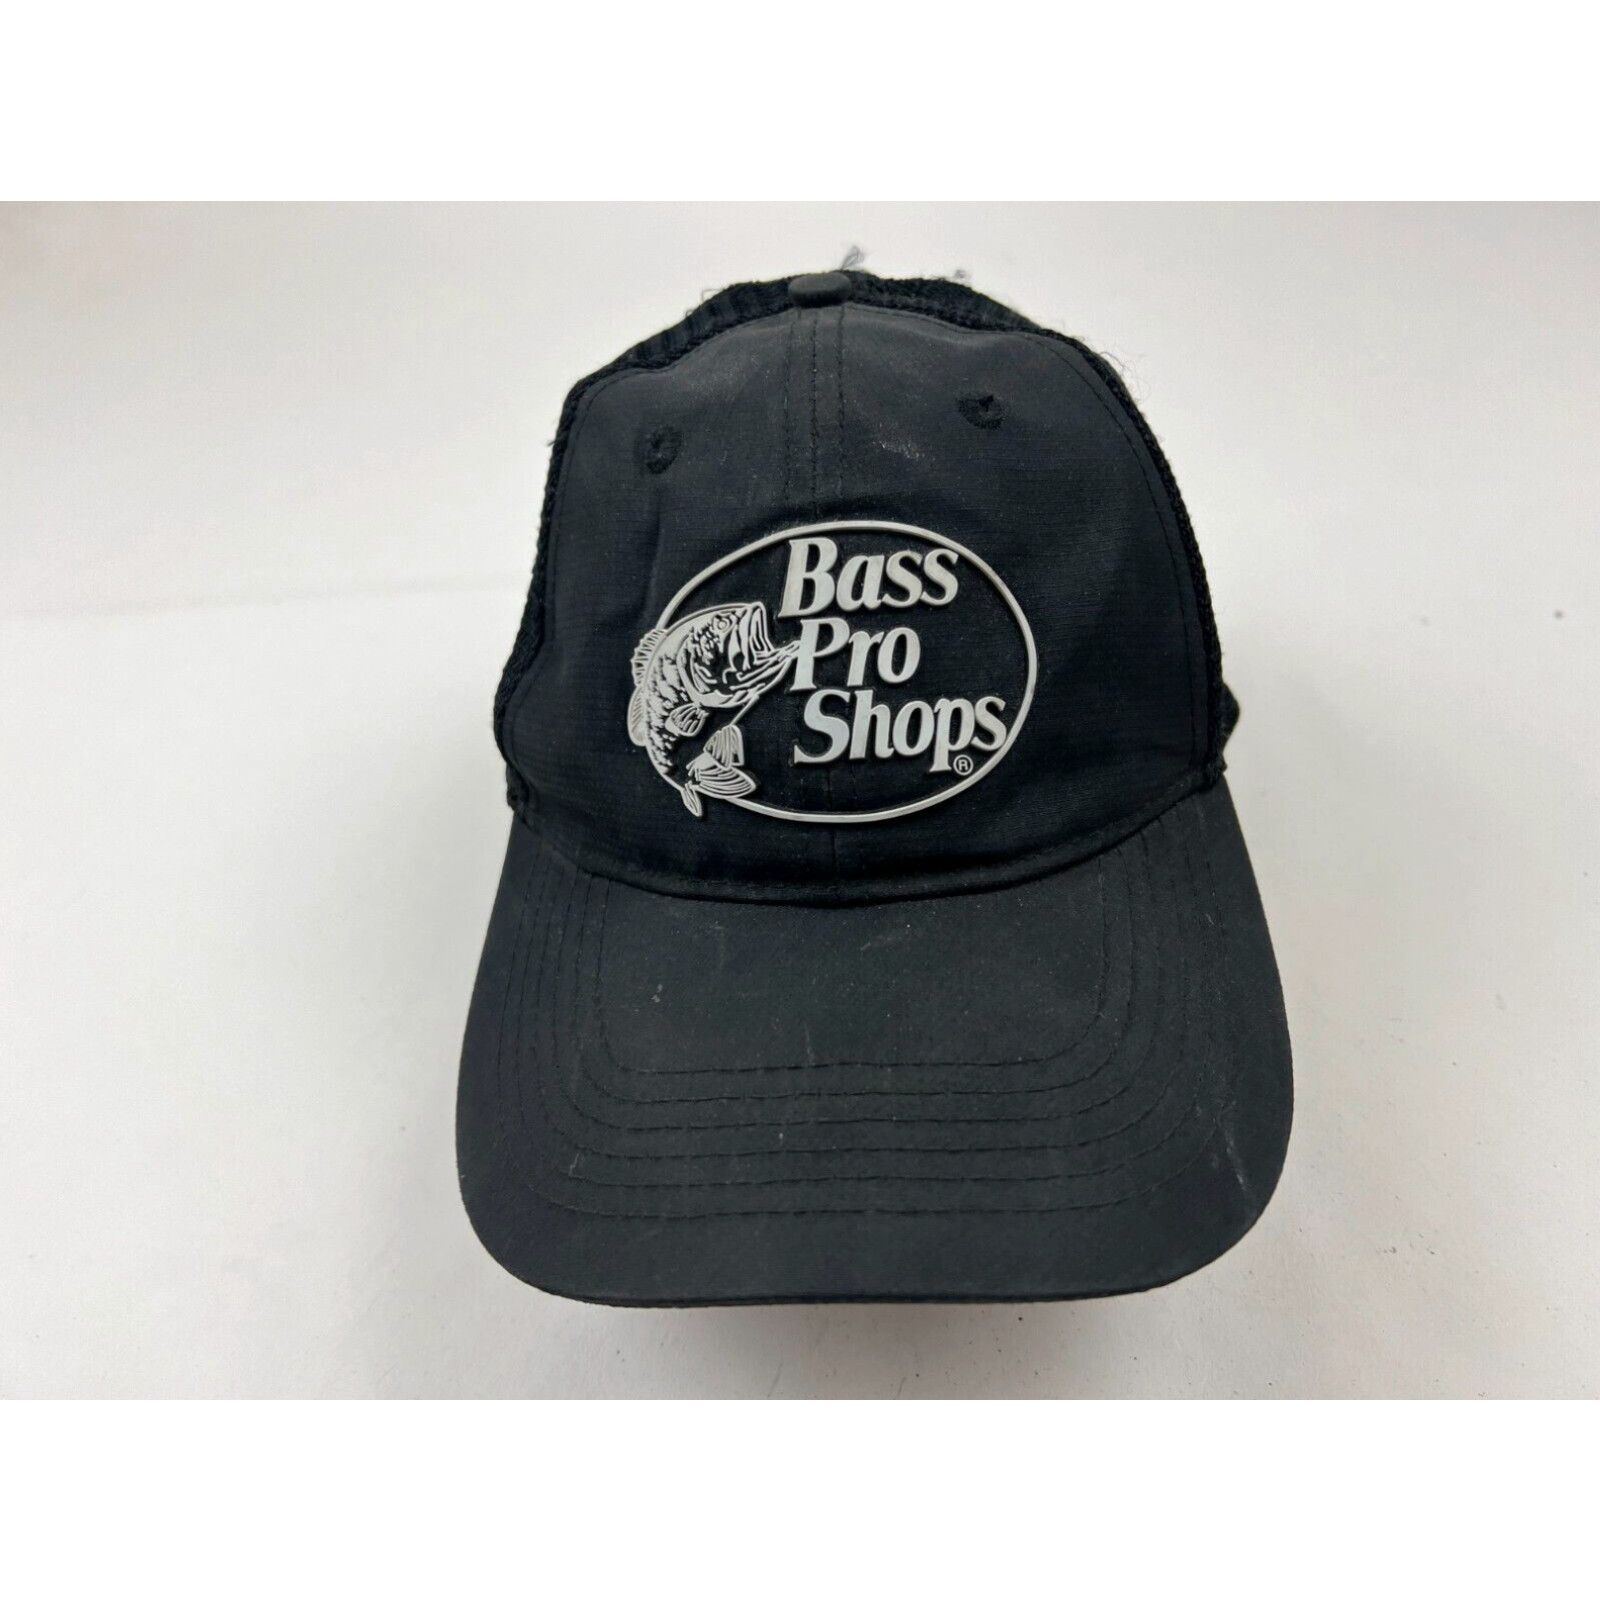 Vintage Trucker Hat Bass Pro Shop Snapback VTG Retro Black Adjustable  Fishing